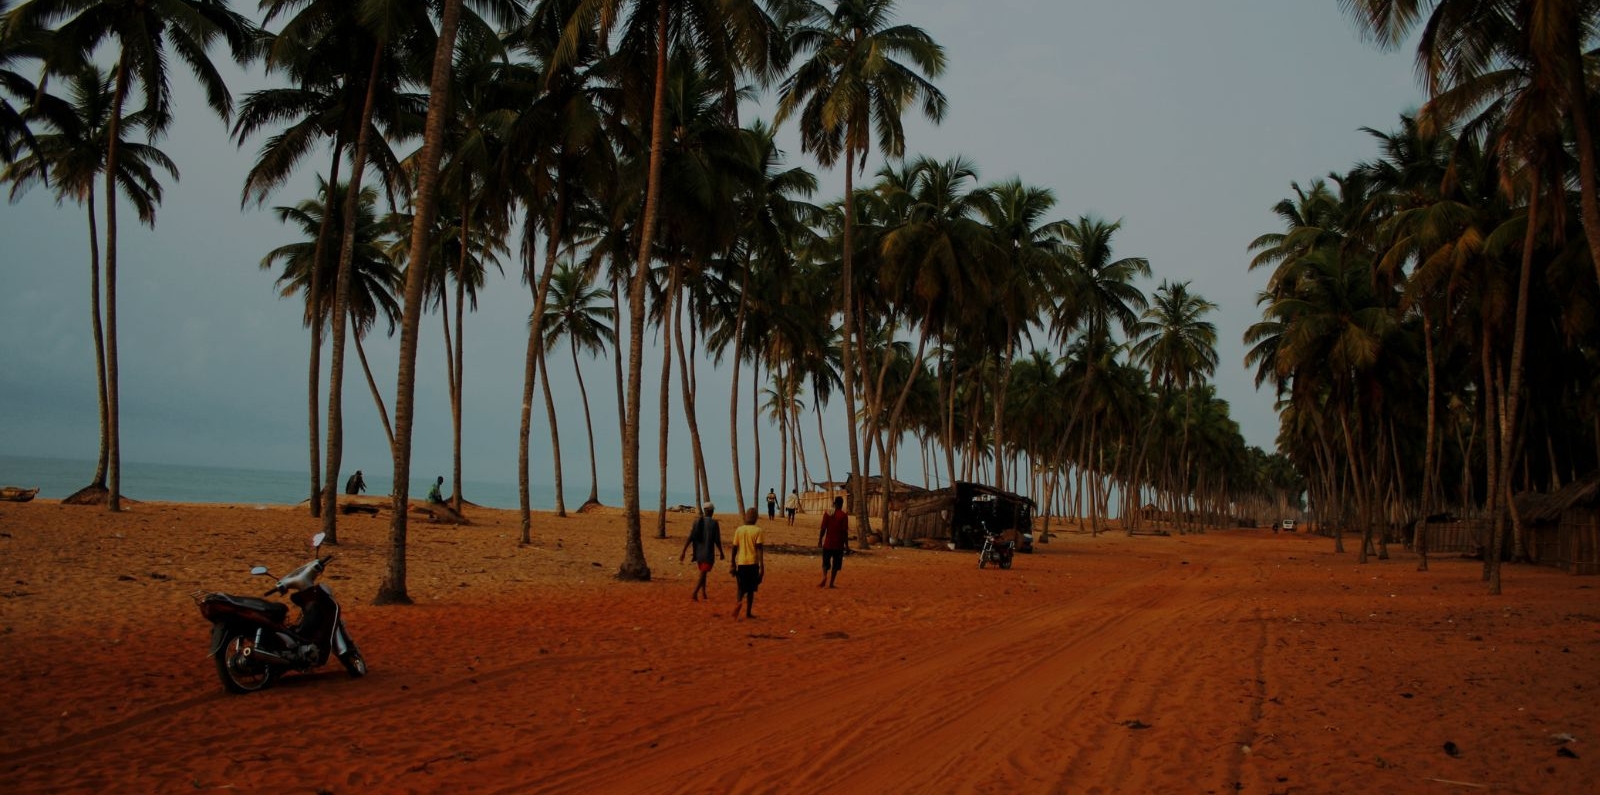 Benin scenes